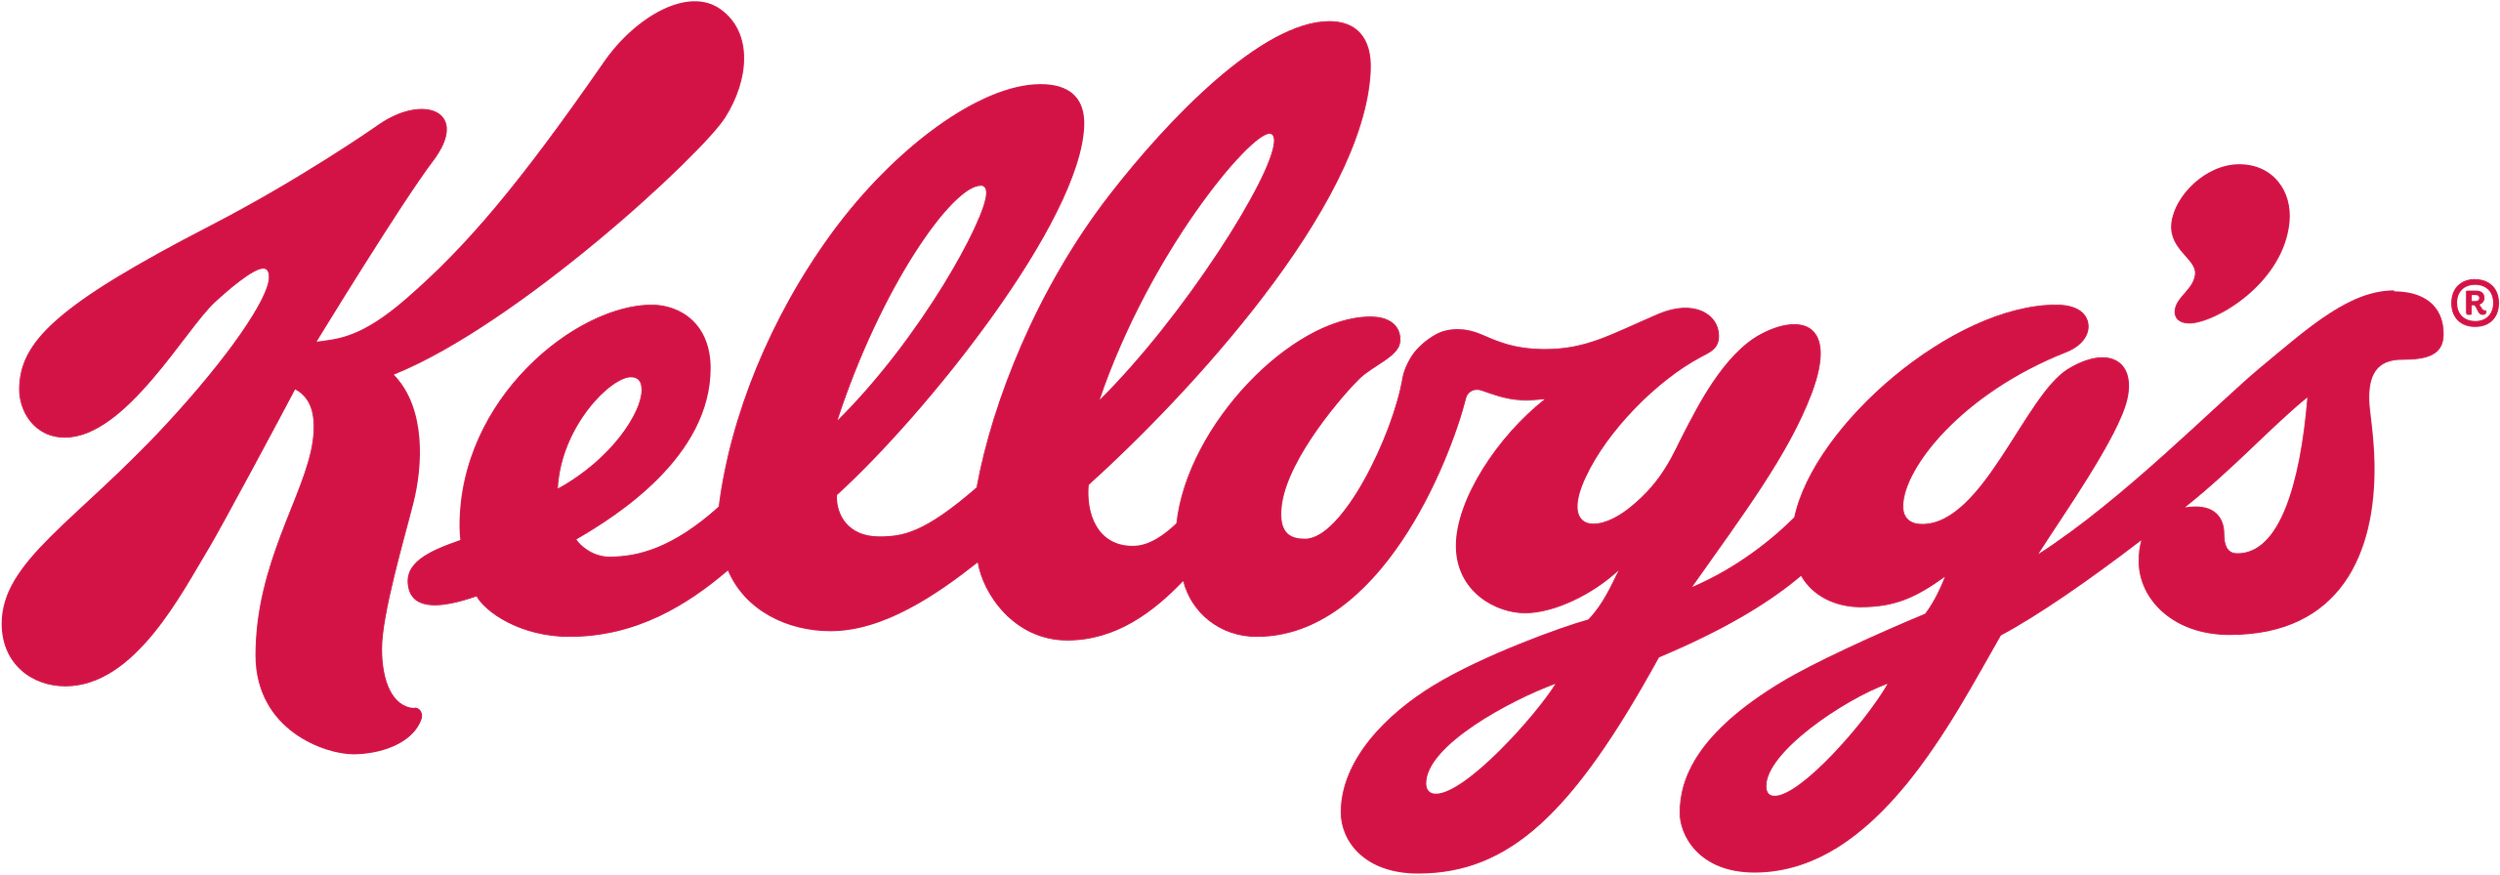 alison murtaugh kellogg's logo